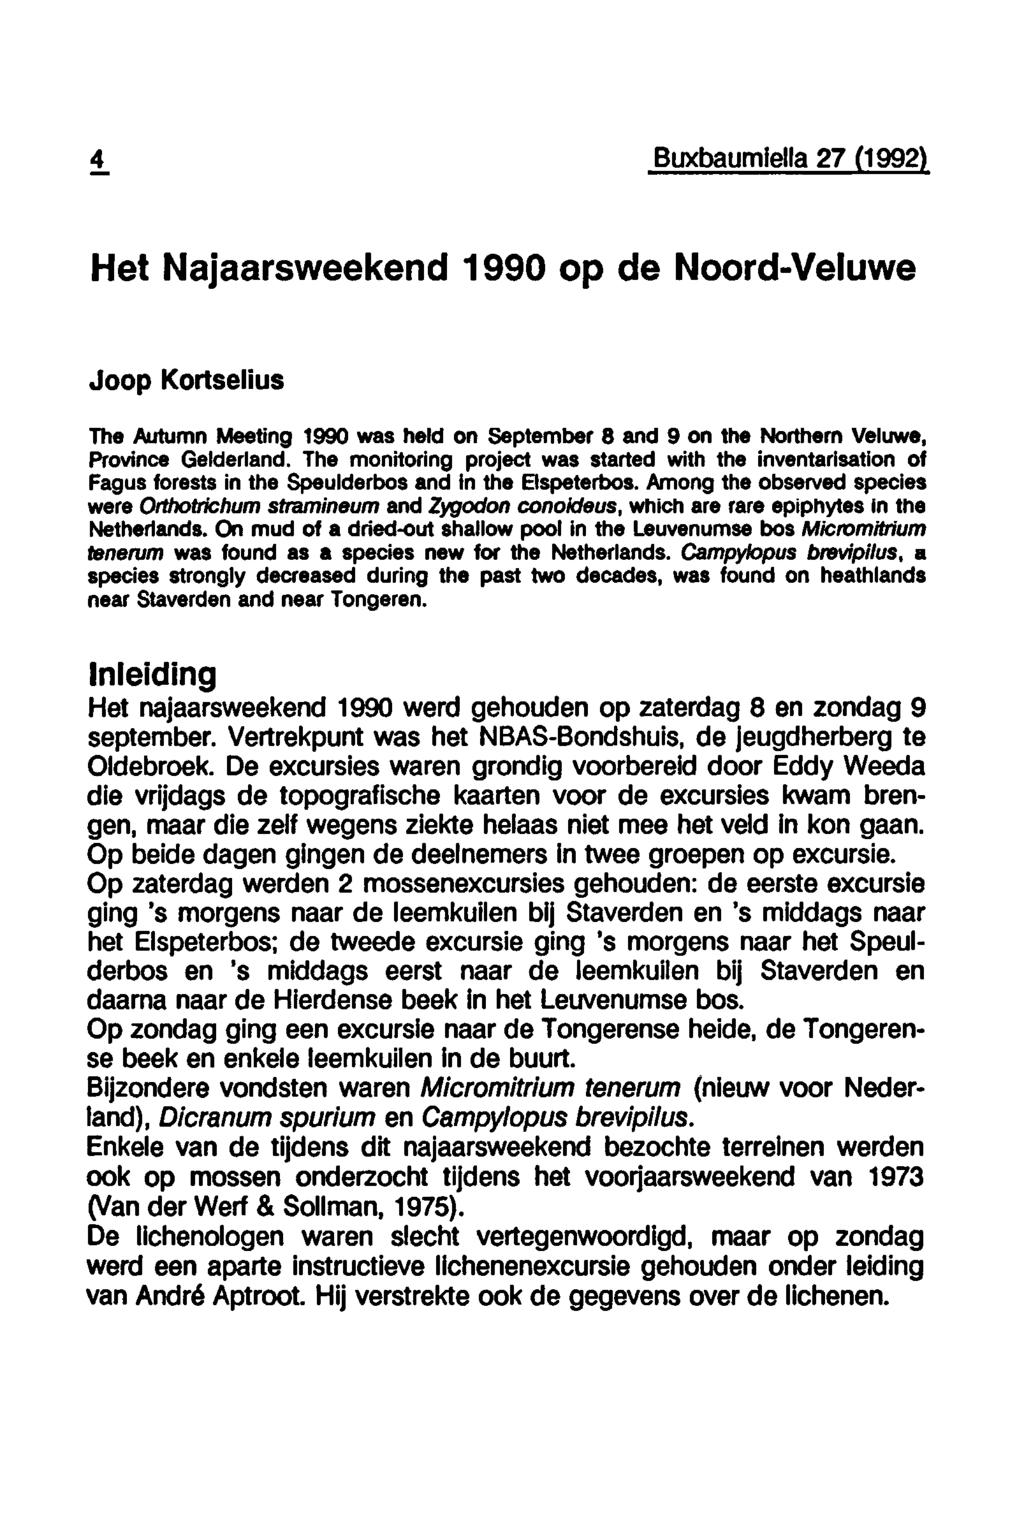 4 Buxbaumiella 27 (1992) (1992! Het Najaarsweekend 1990 op de Noord-Veluwe Joop Kortselius The Autumn Meeting 1990 was held on September 8 and 9 on the Northern Veluwe, Province Gelderland.